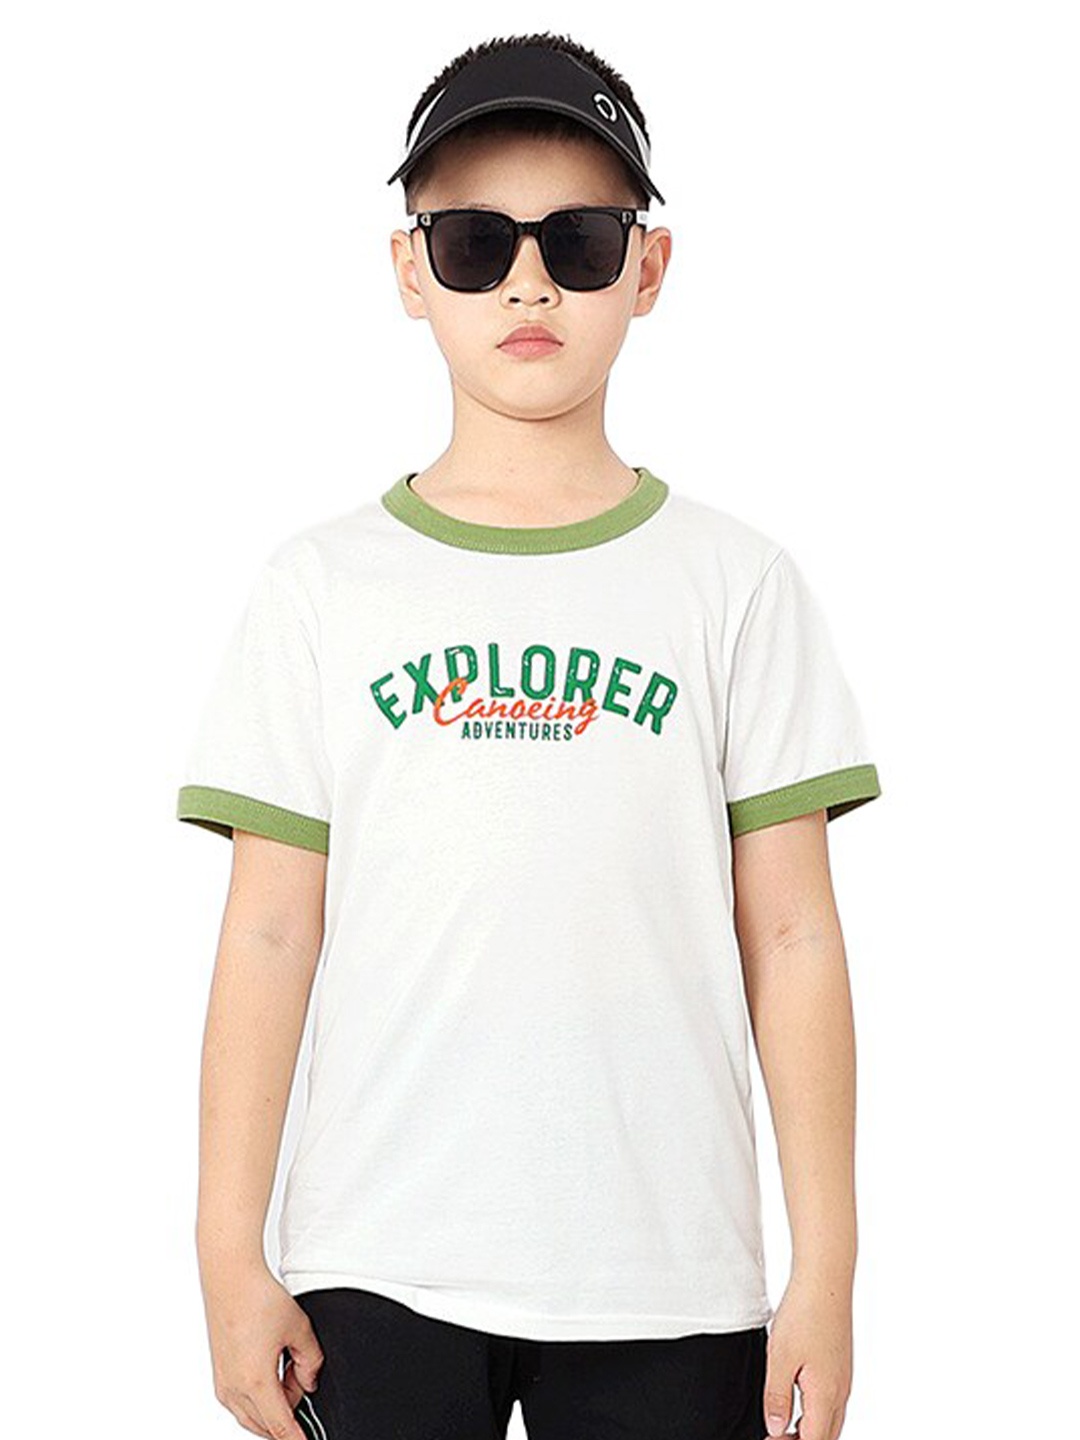 

StyleCast x Revolte Boys Round Neck Short Sleeves Typographic Printed Cotton T-shirt, White